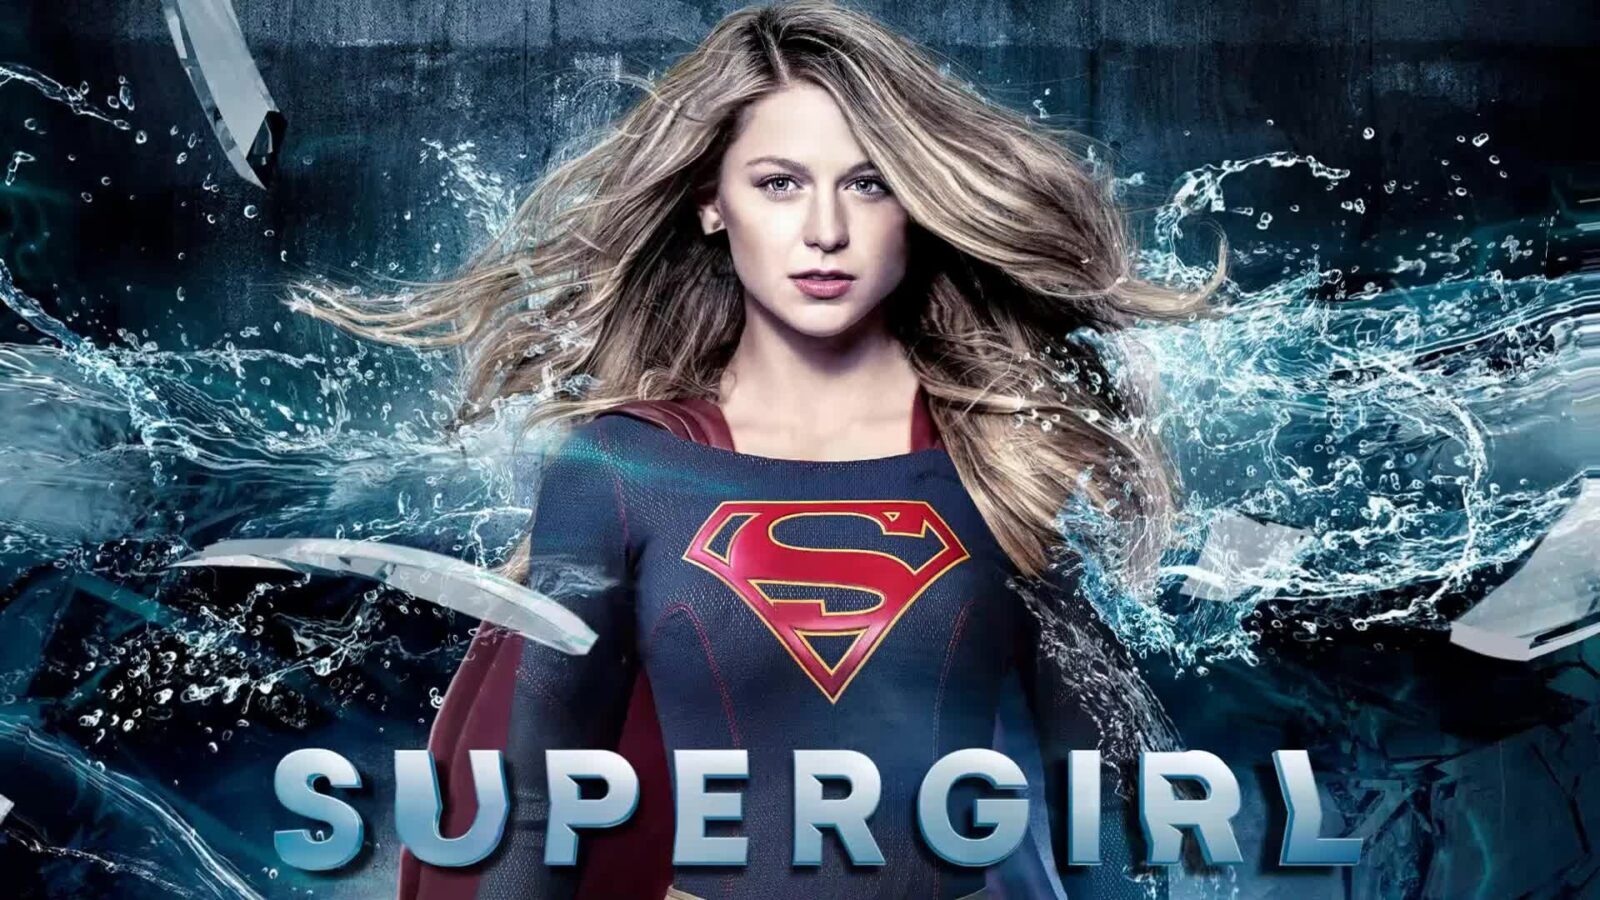 LiveWallpapers4Free.com | Supergirl Season 3 Hero Melissa Benoist - Desktop Live Wallpaper